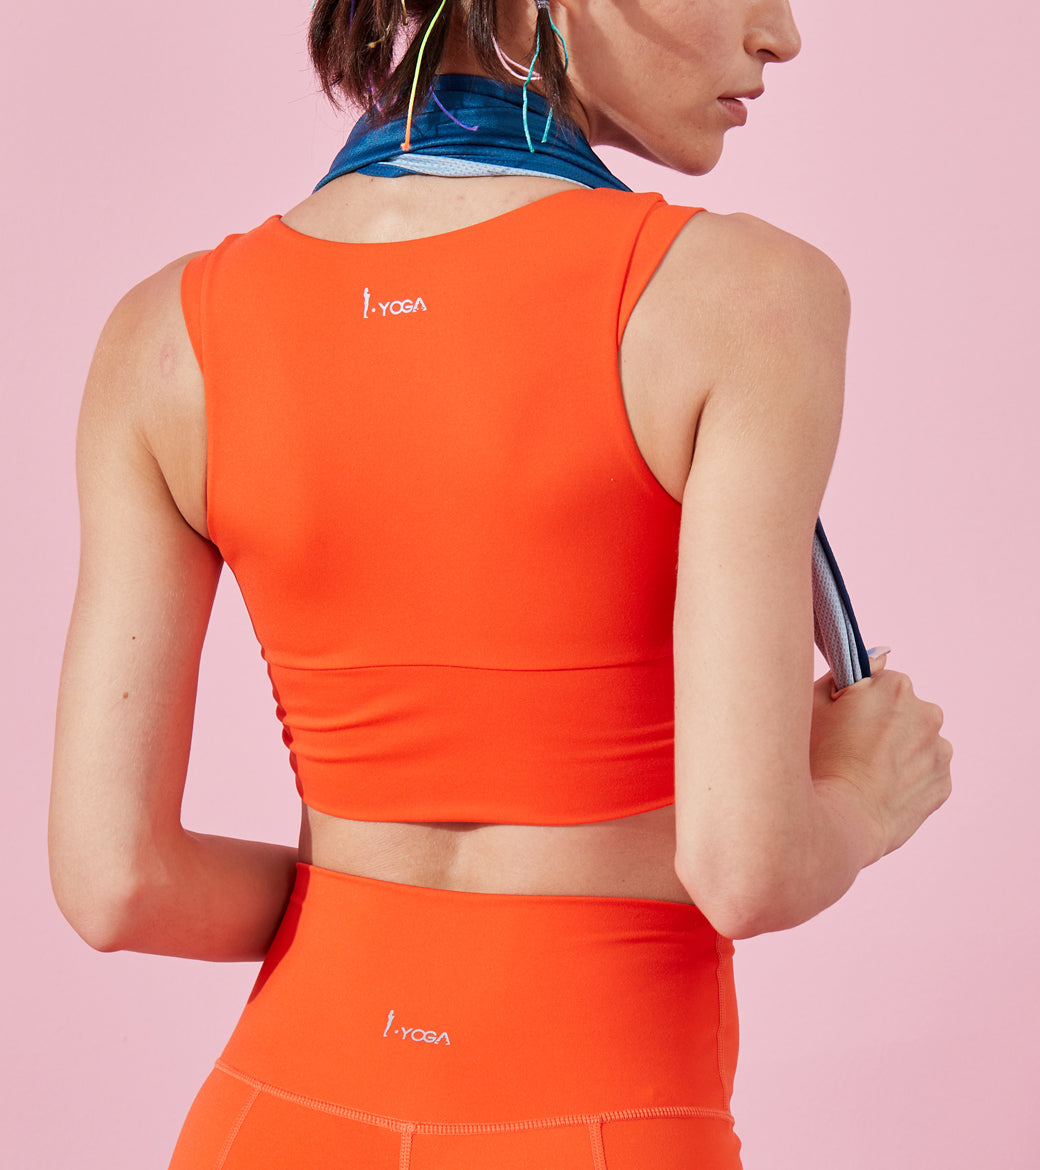 LOVESOFT Women's Orange Lycra Fitness Bra Yoga Top